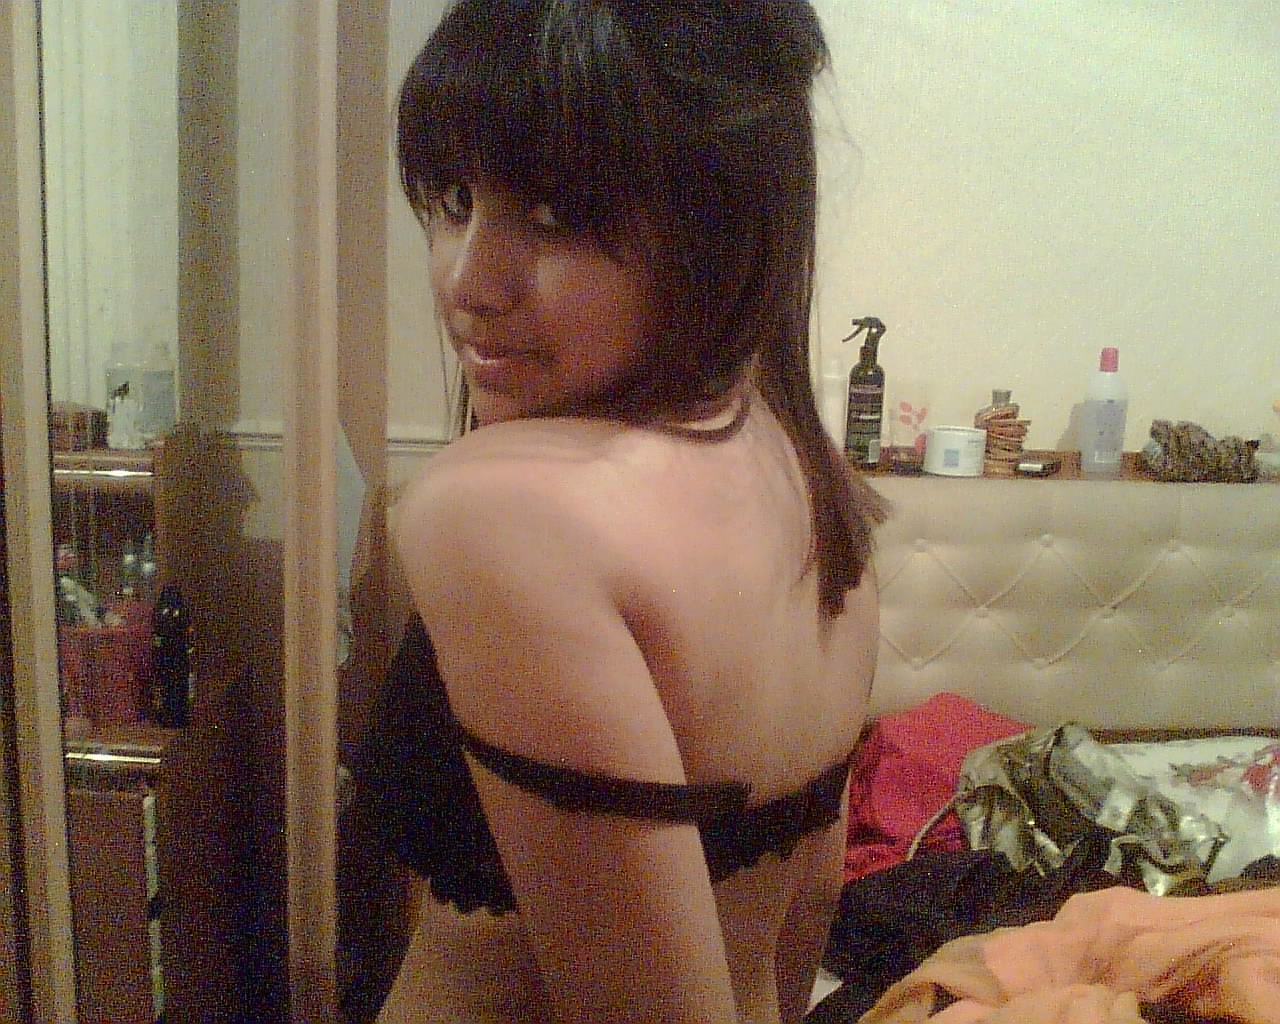 Slutty sexy indian babe